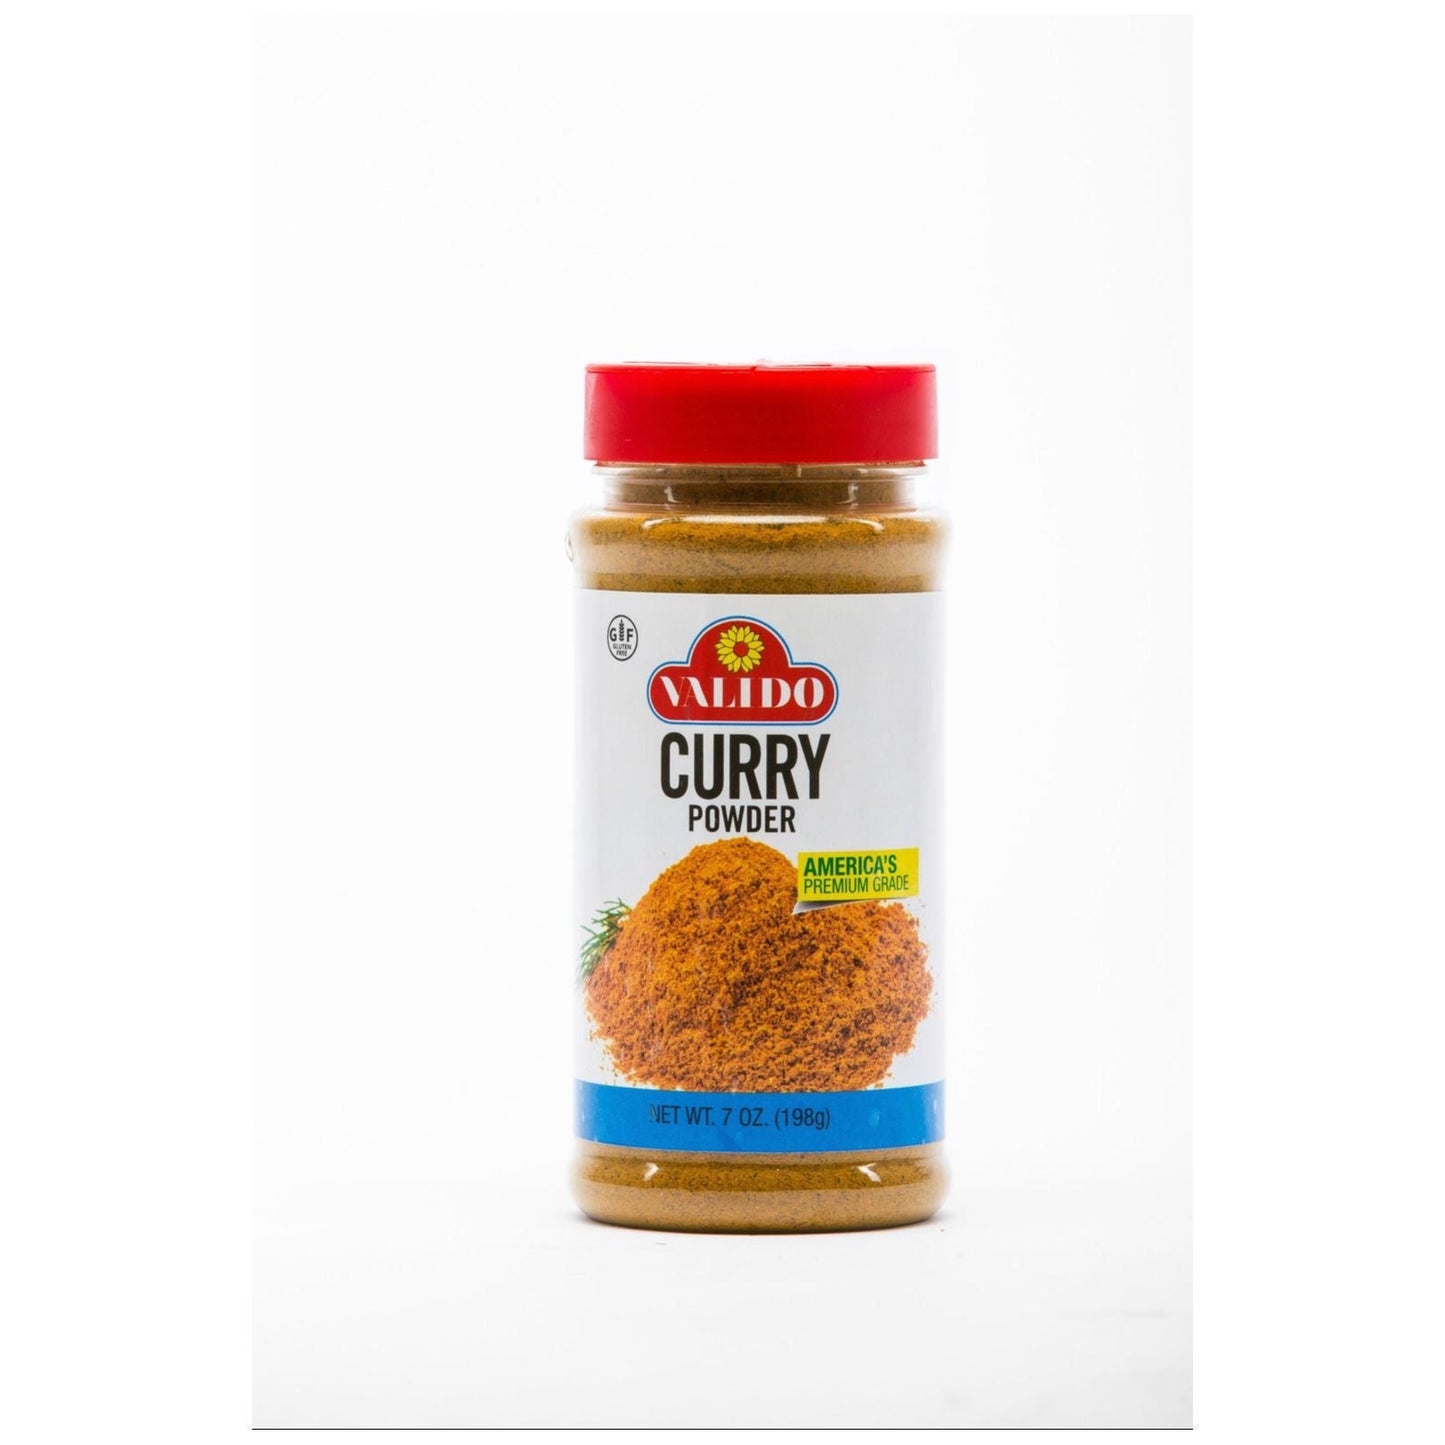 Valido Curry Powder /7oz - Break Stop